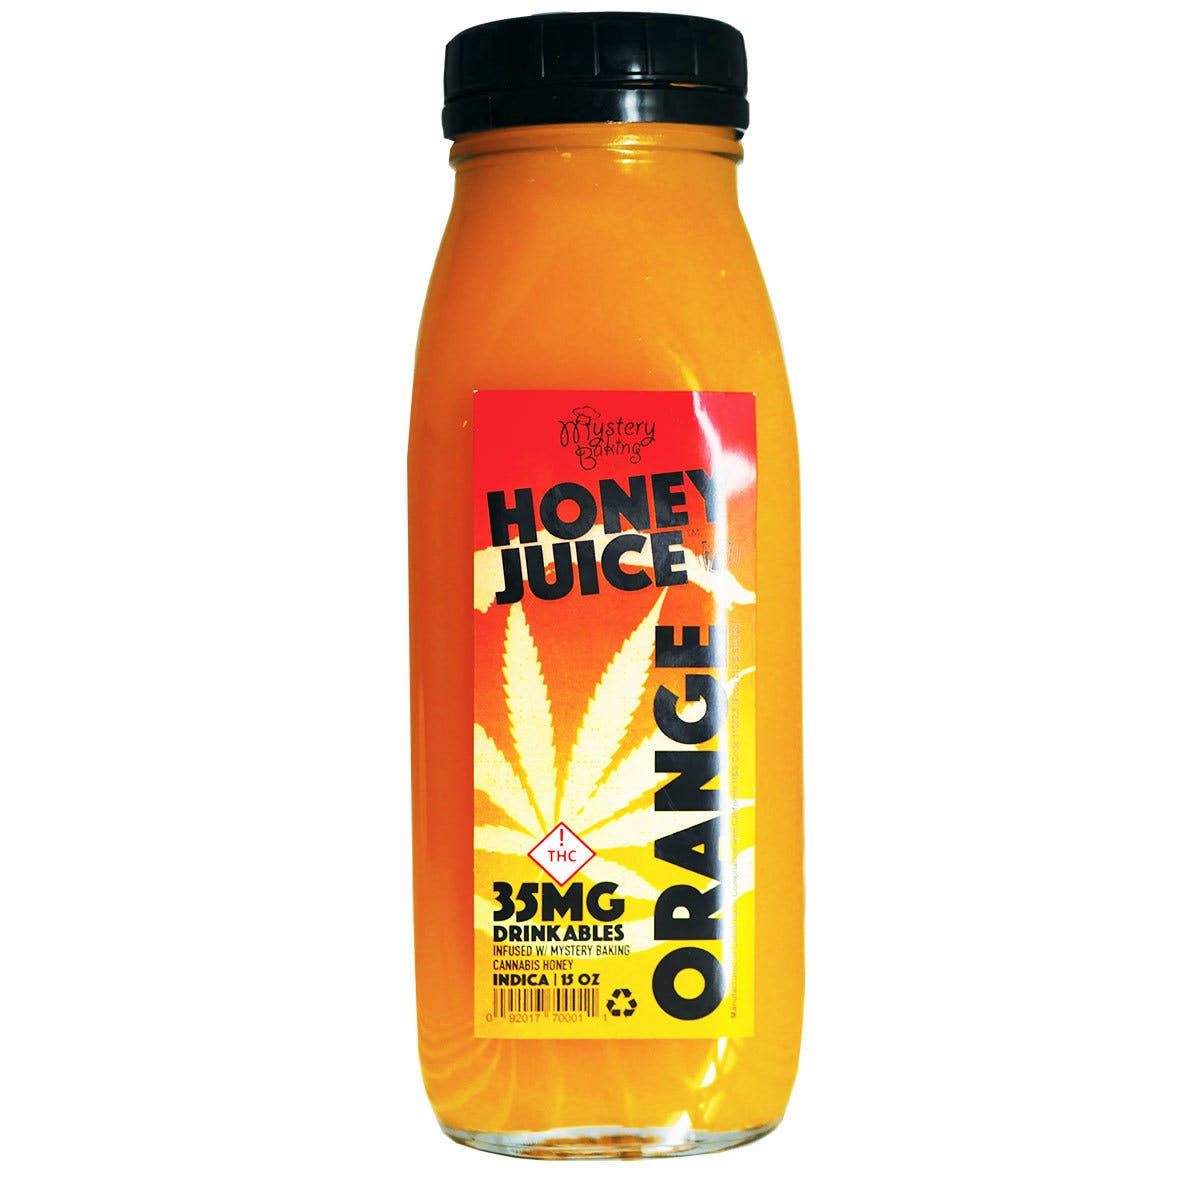 edible-orange-honey-juice-35mg